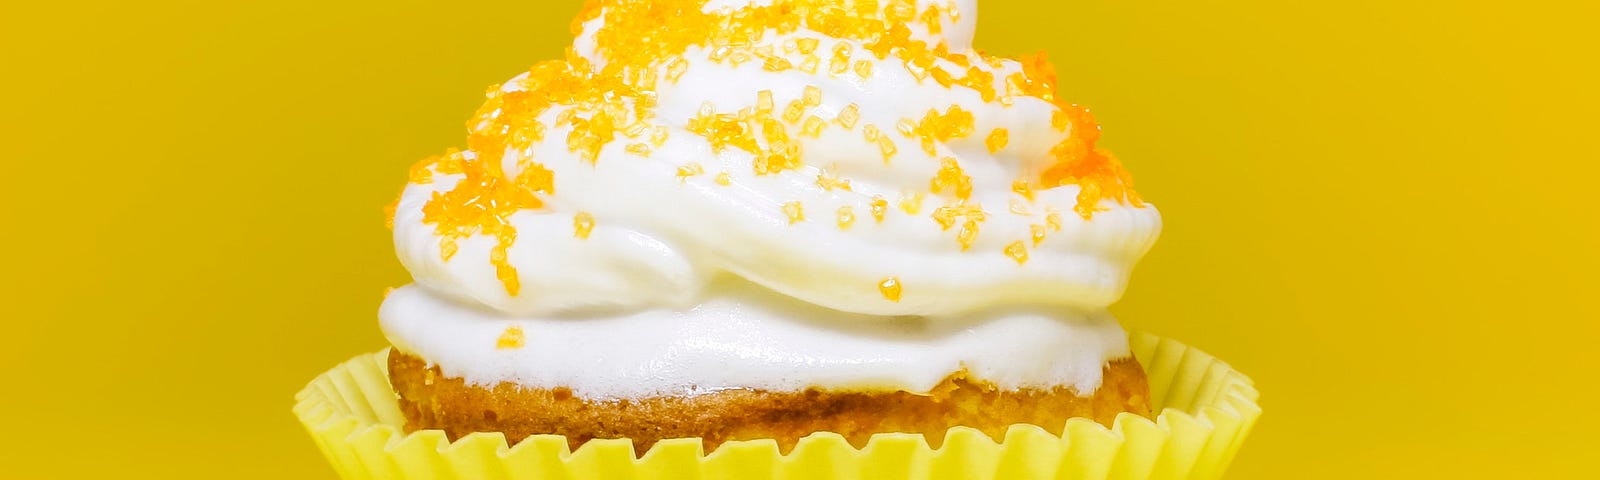 yello cupcake with white cream and yellow sprinkles. Yellow background